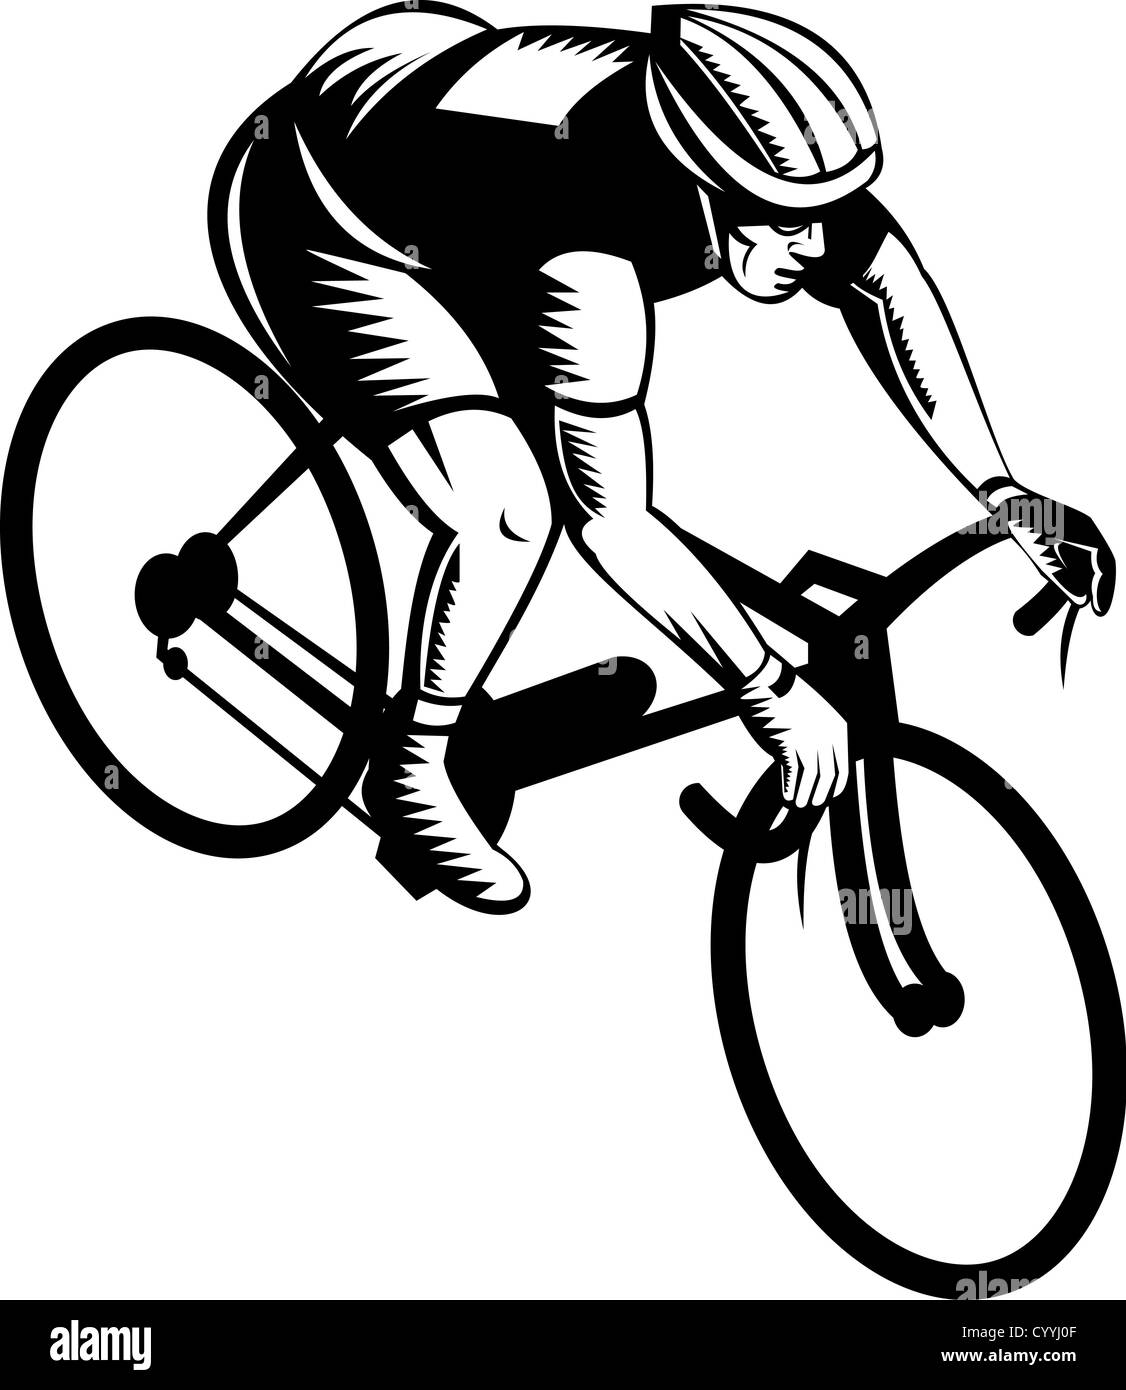 bicicleta de carreras, hombre en bicicleta de carretera sobre fondo blanco  5164712 Vector en Vecteezy